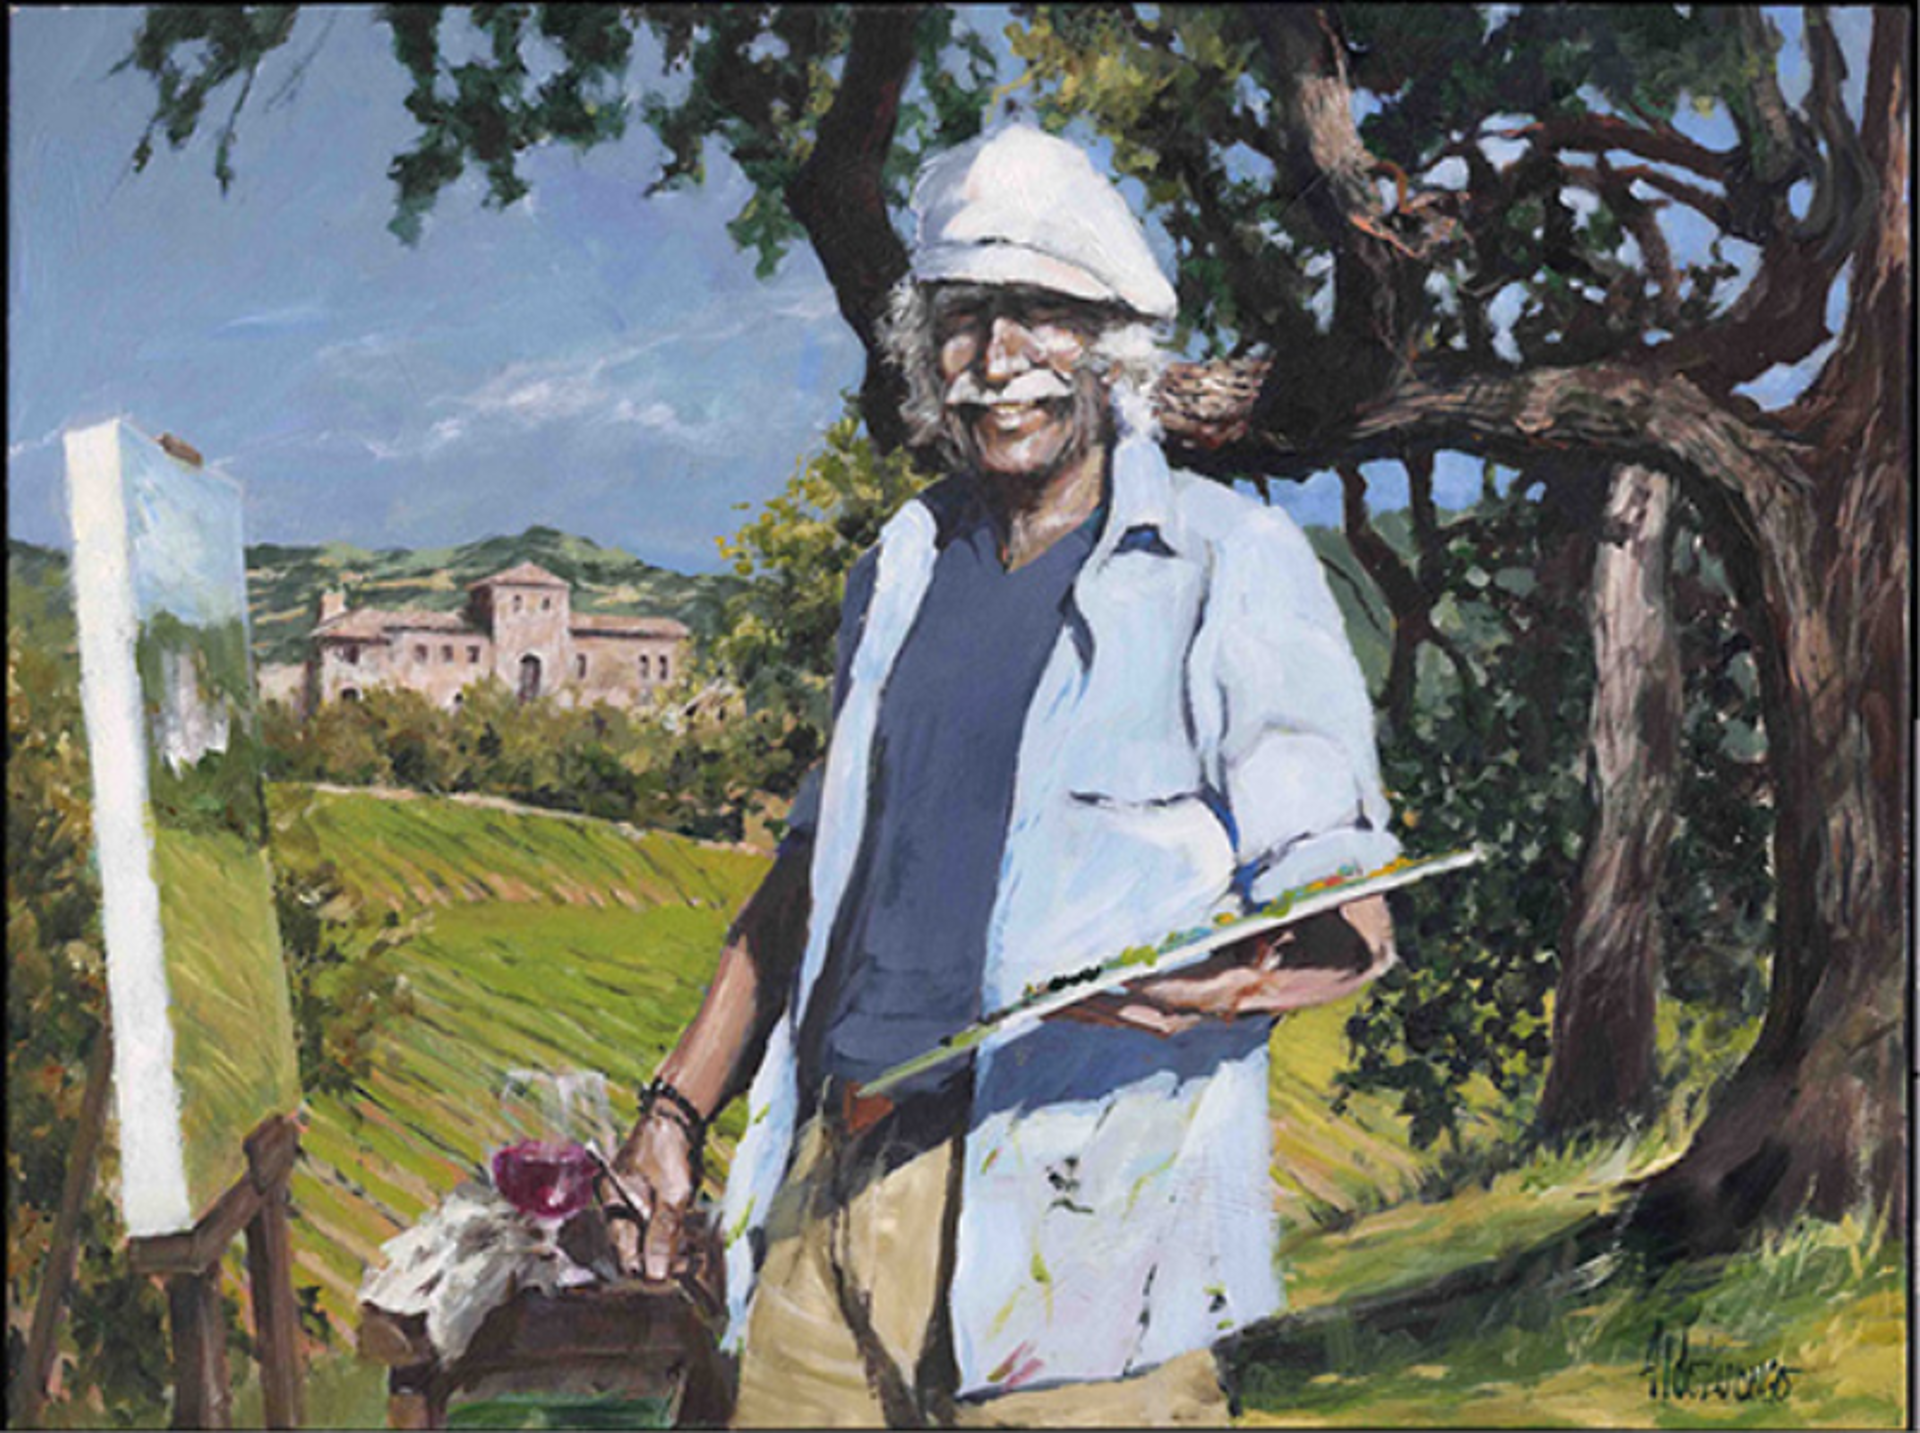 The Painter at Sunstone Villa by Aldo Luongo